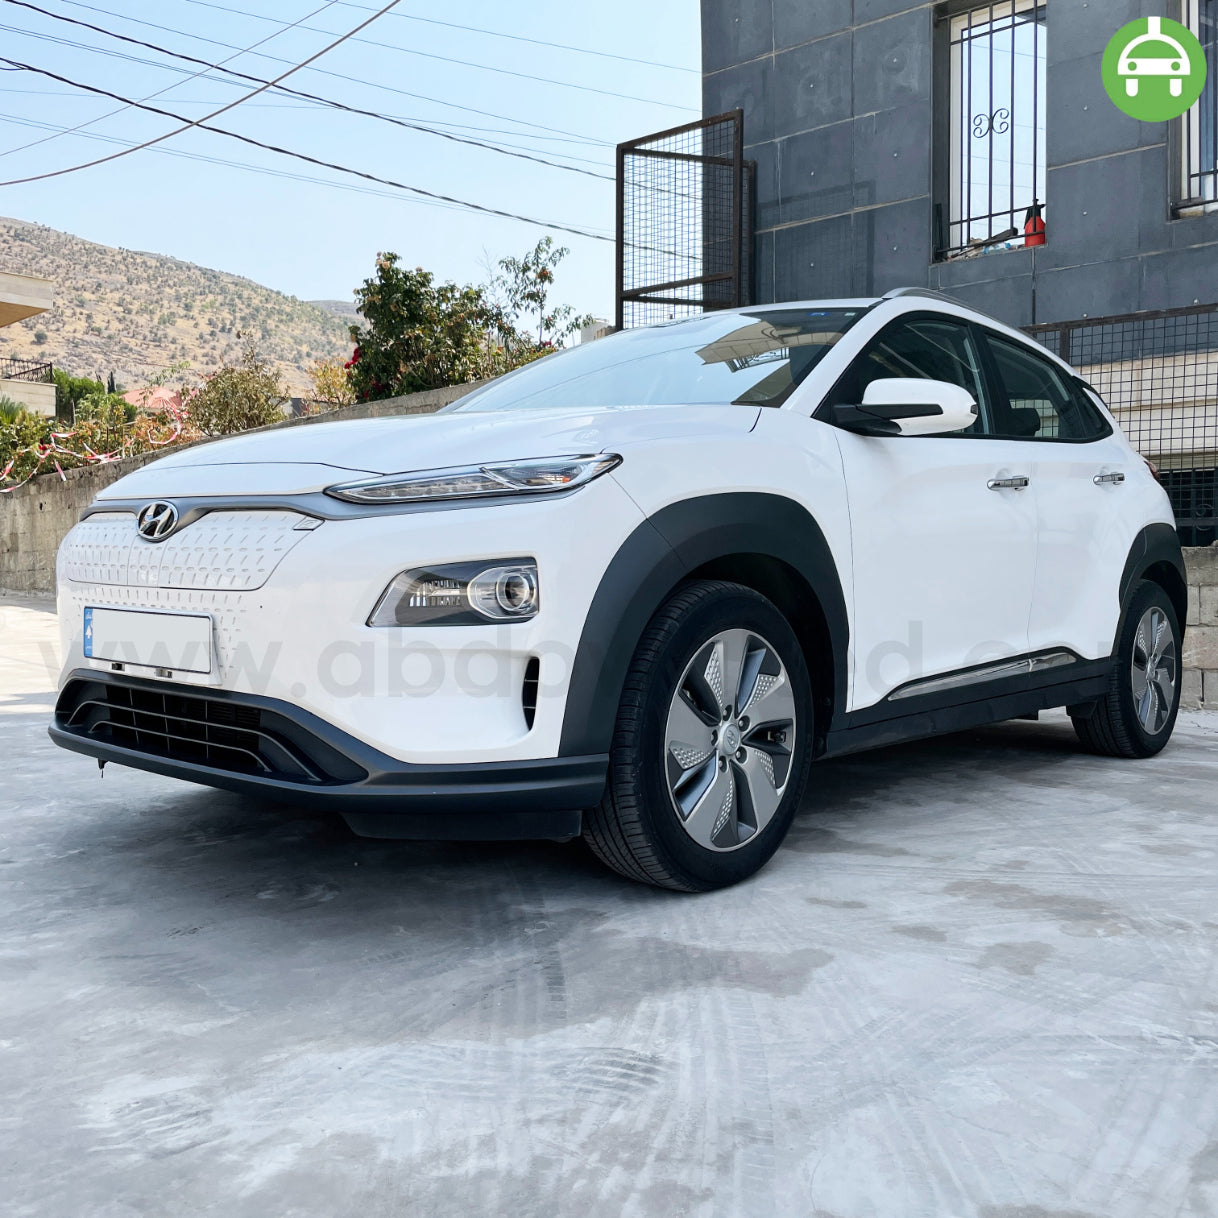 Hyundai Kona 2019 White Color 500Km Range/Charge Fully Electric Car (Used Like New - 11000KM)